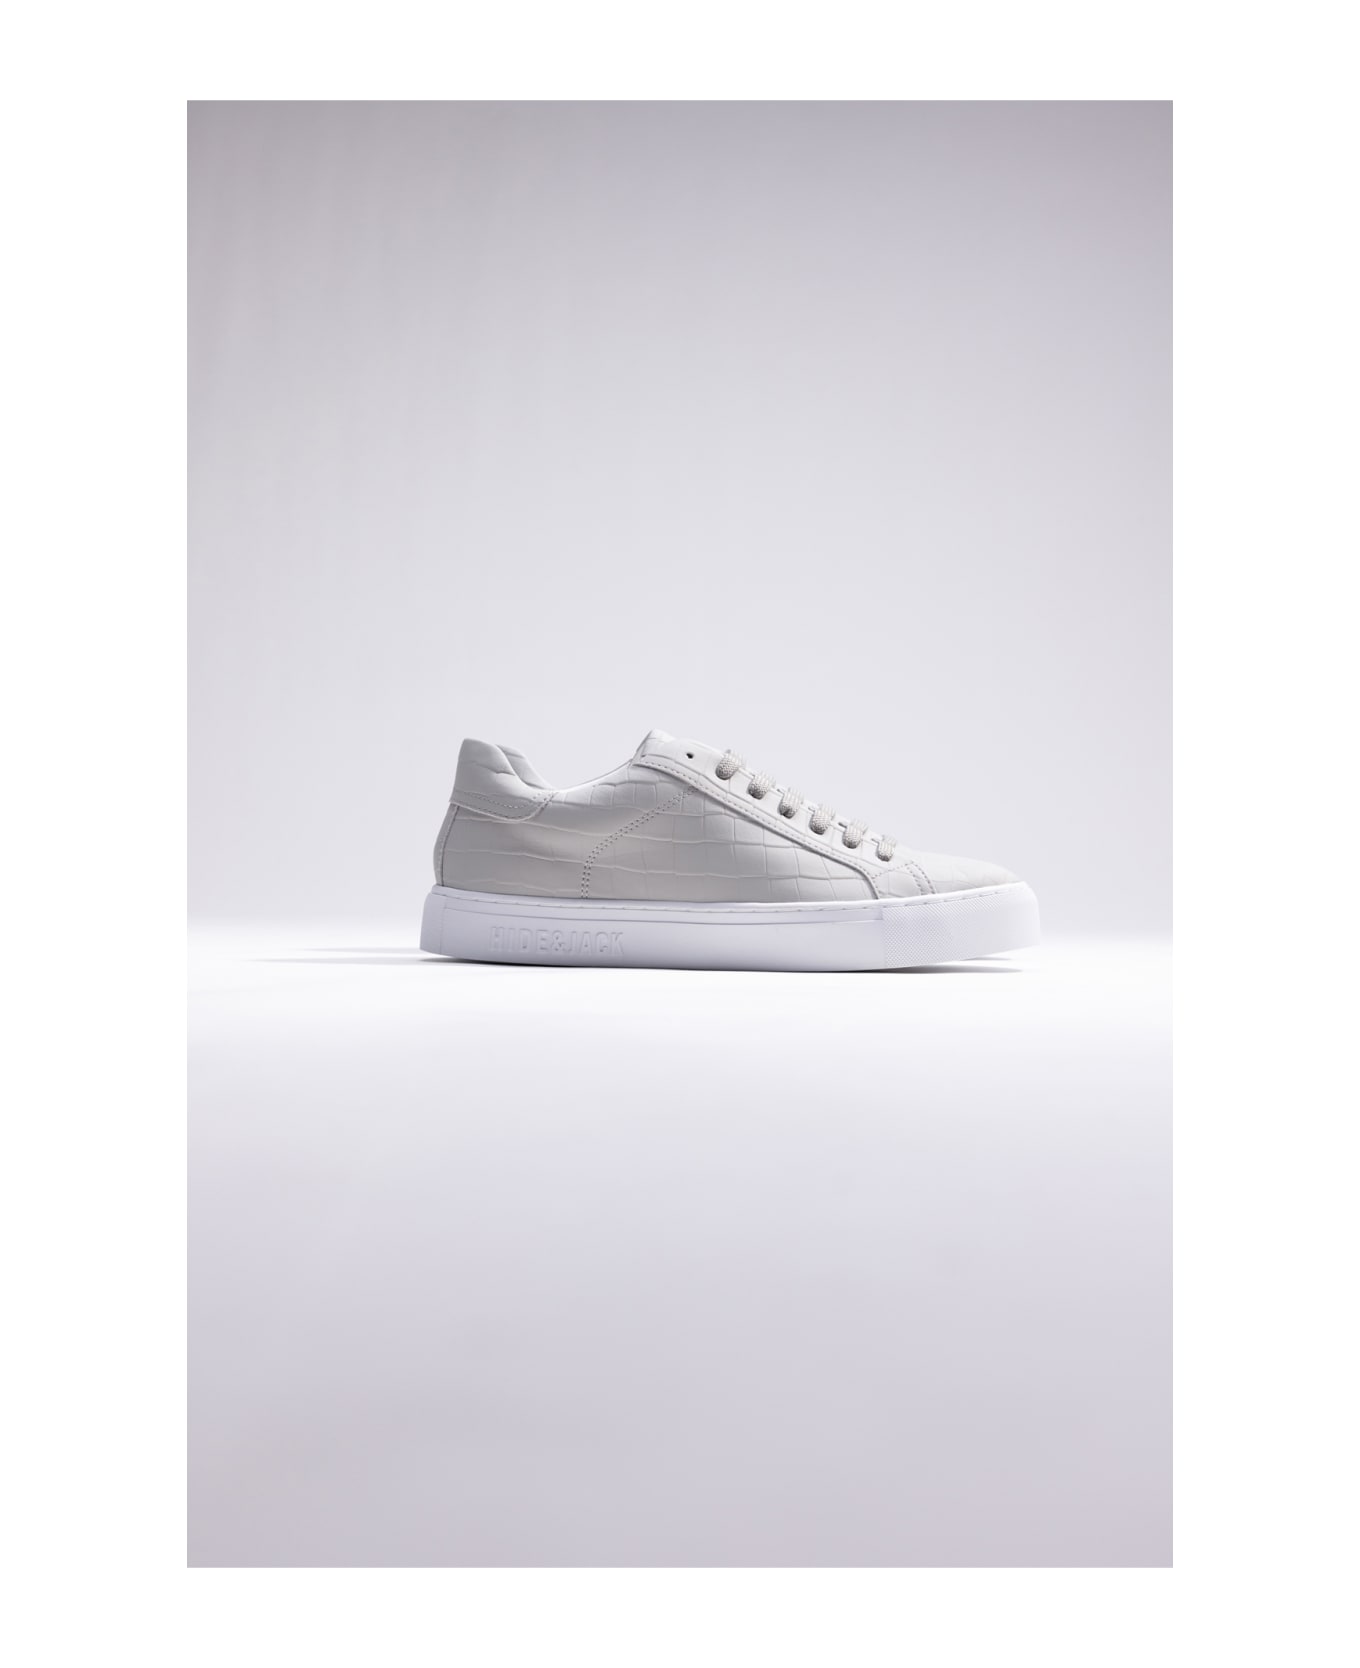 Hide&Jack Low Top Sneaker - Essence Grey White スニーカー